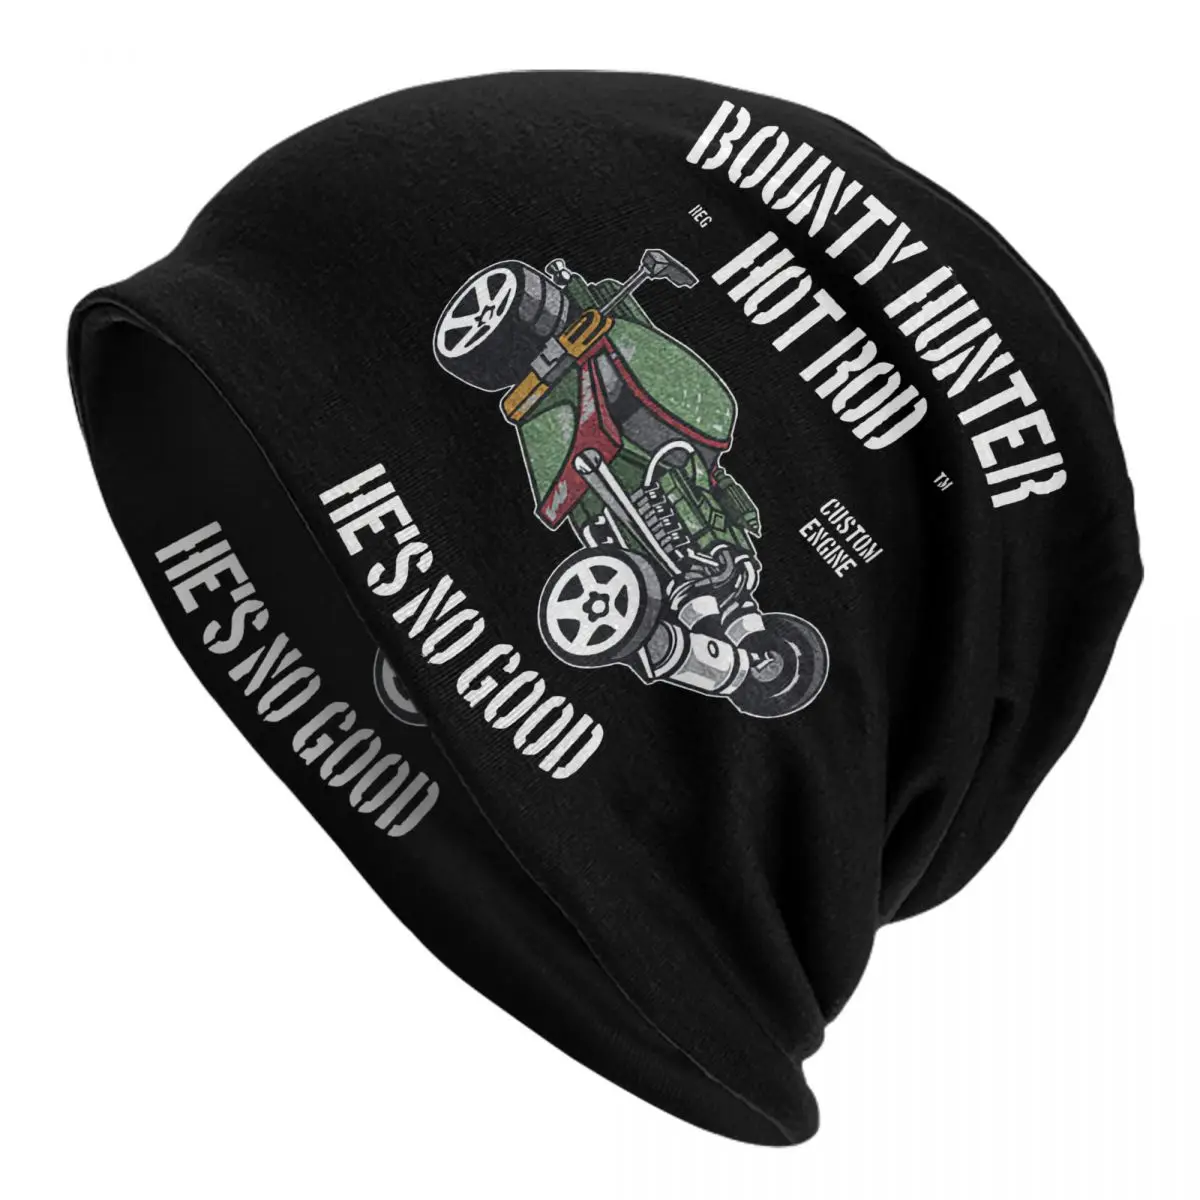 Bounty Hunter Hotrod, Car Custom Design Engine Adult Men's Women's Knit Hat Keep warm winter Funny knitted hat